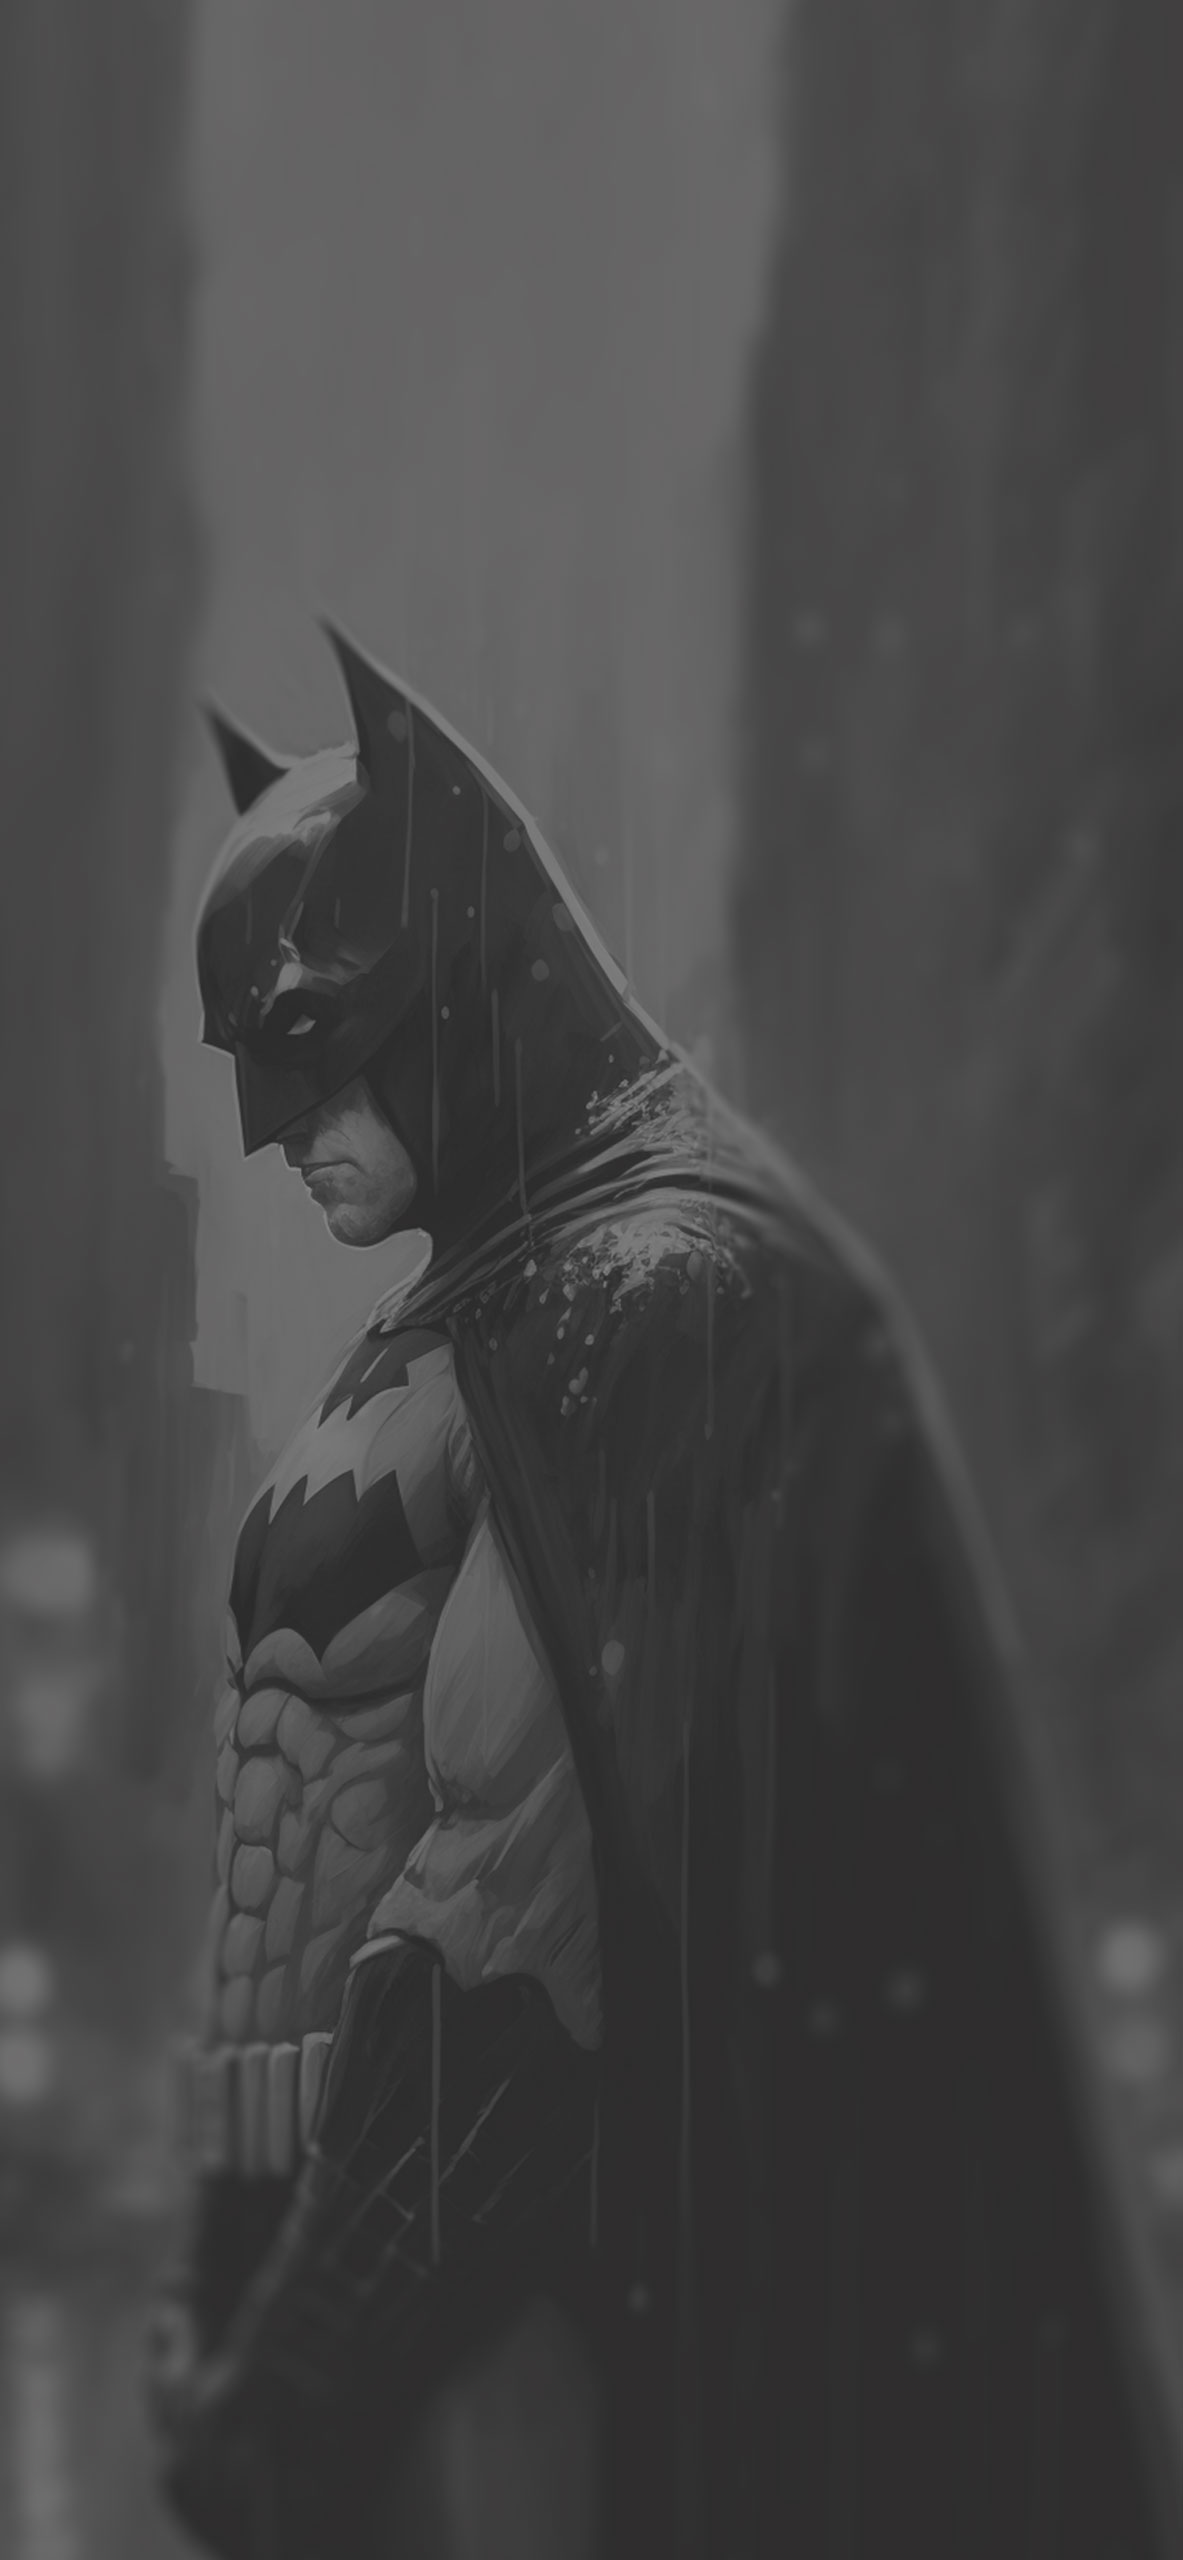 Batman in the Rain Wallpaper Wallpaper for iPhone